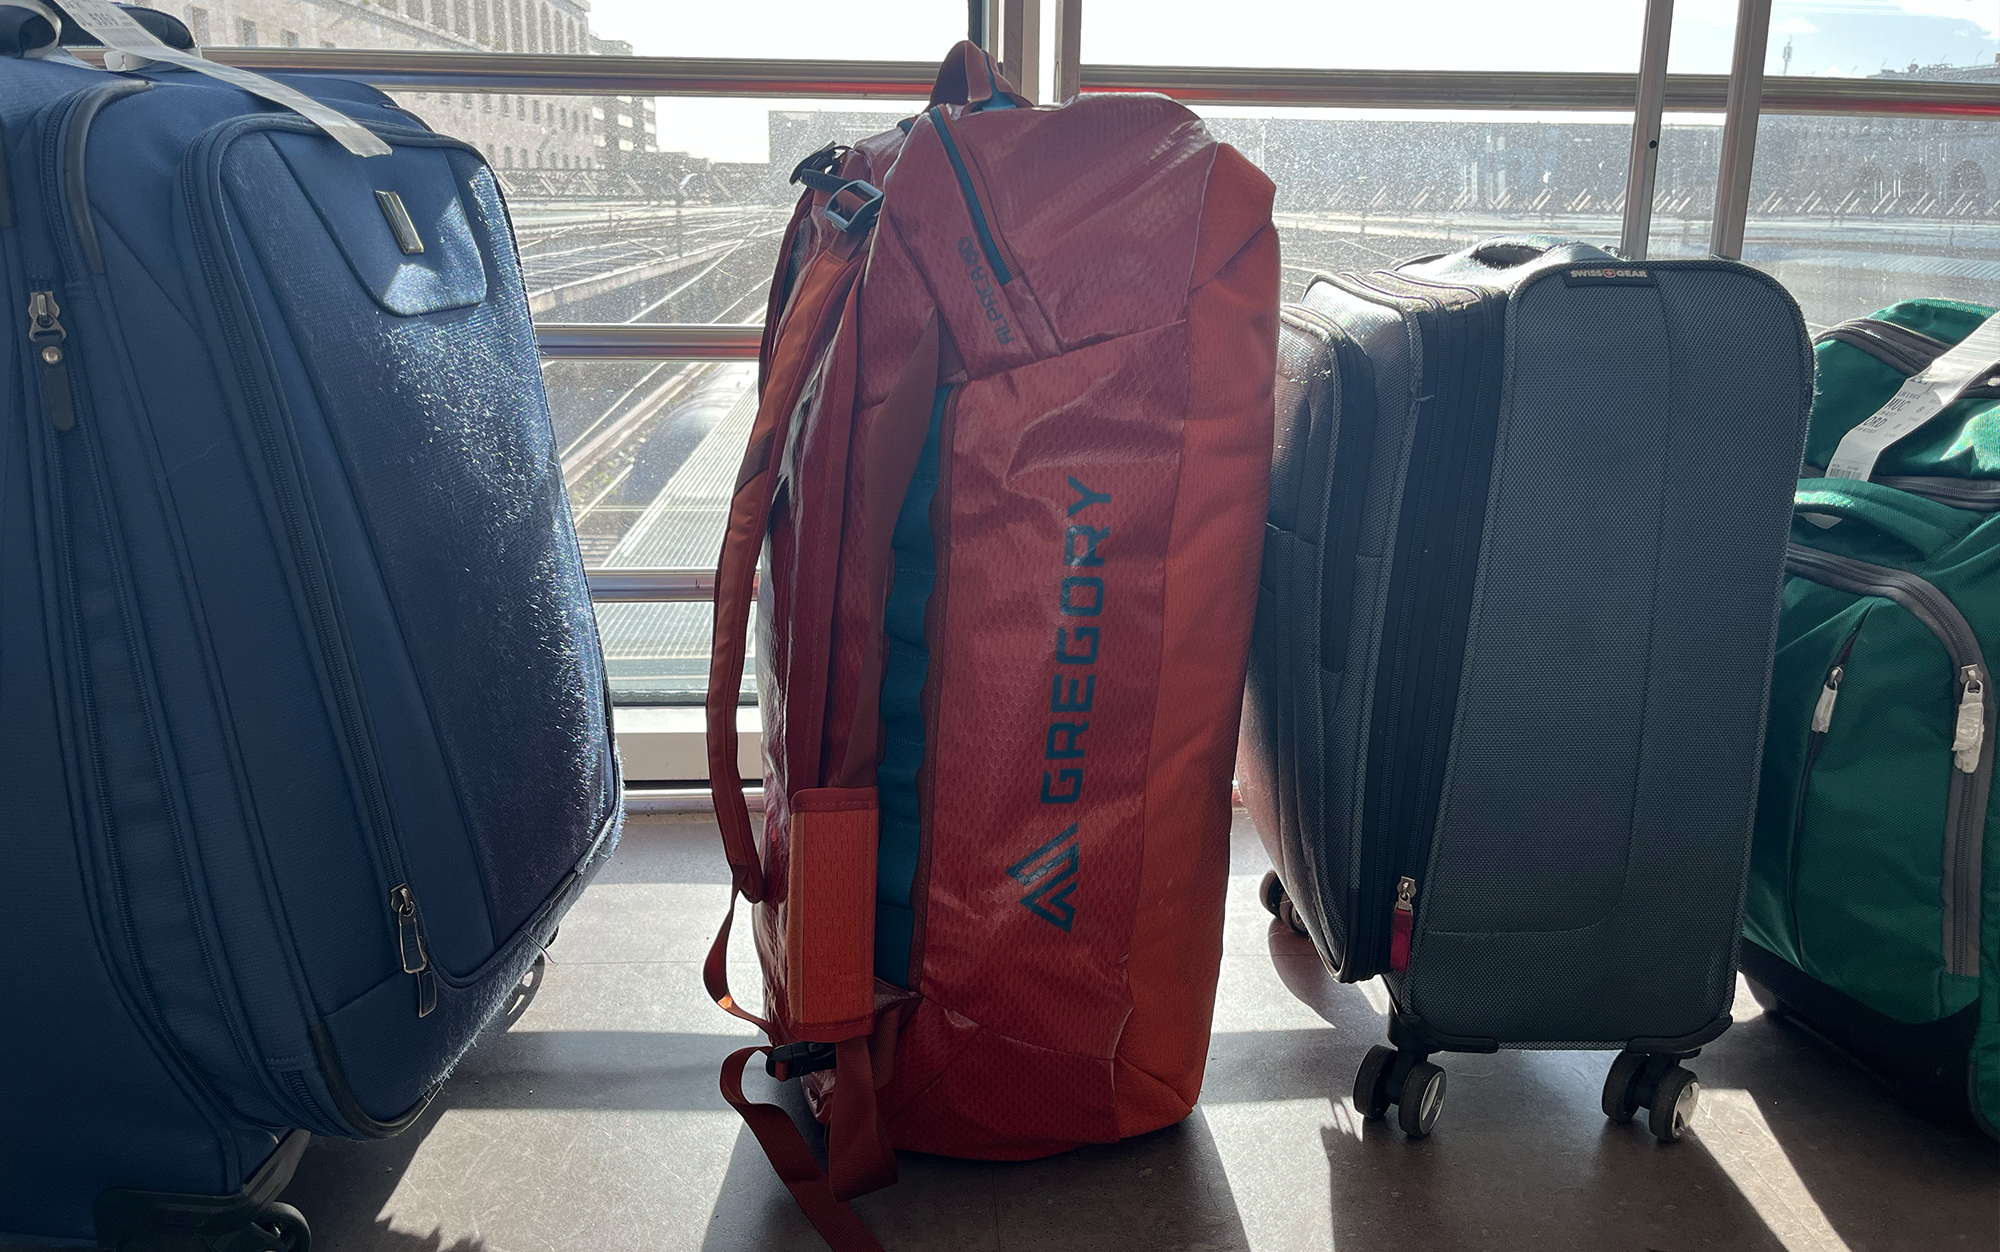 MF Road trip  Road trip outfit, Road trip bag, Travel backpack essentials